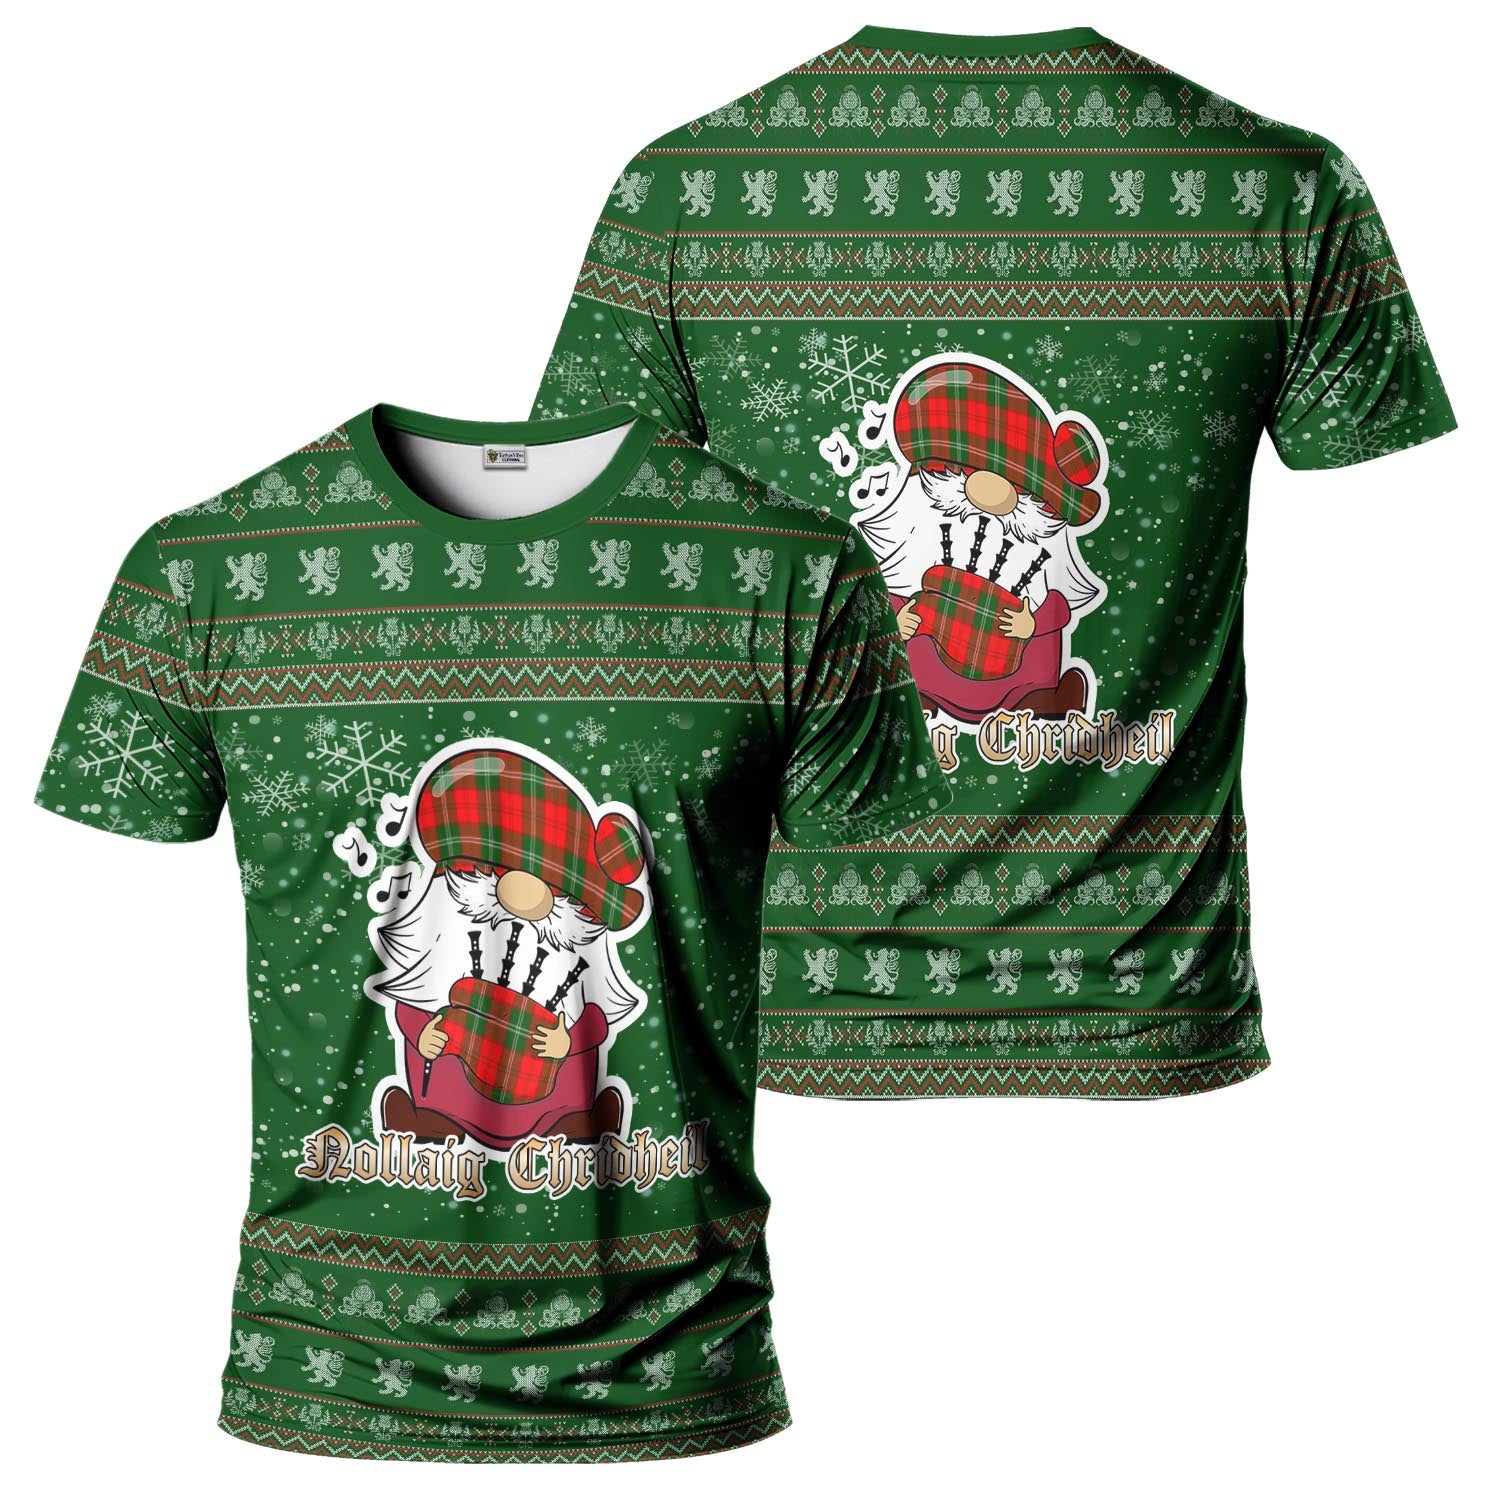 Gartshore Clan Christmas Family T-Shirt with Funny Gnome Playing Bagpipes Men's Shirt Green - Tartanvibesclothing